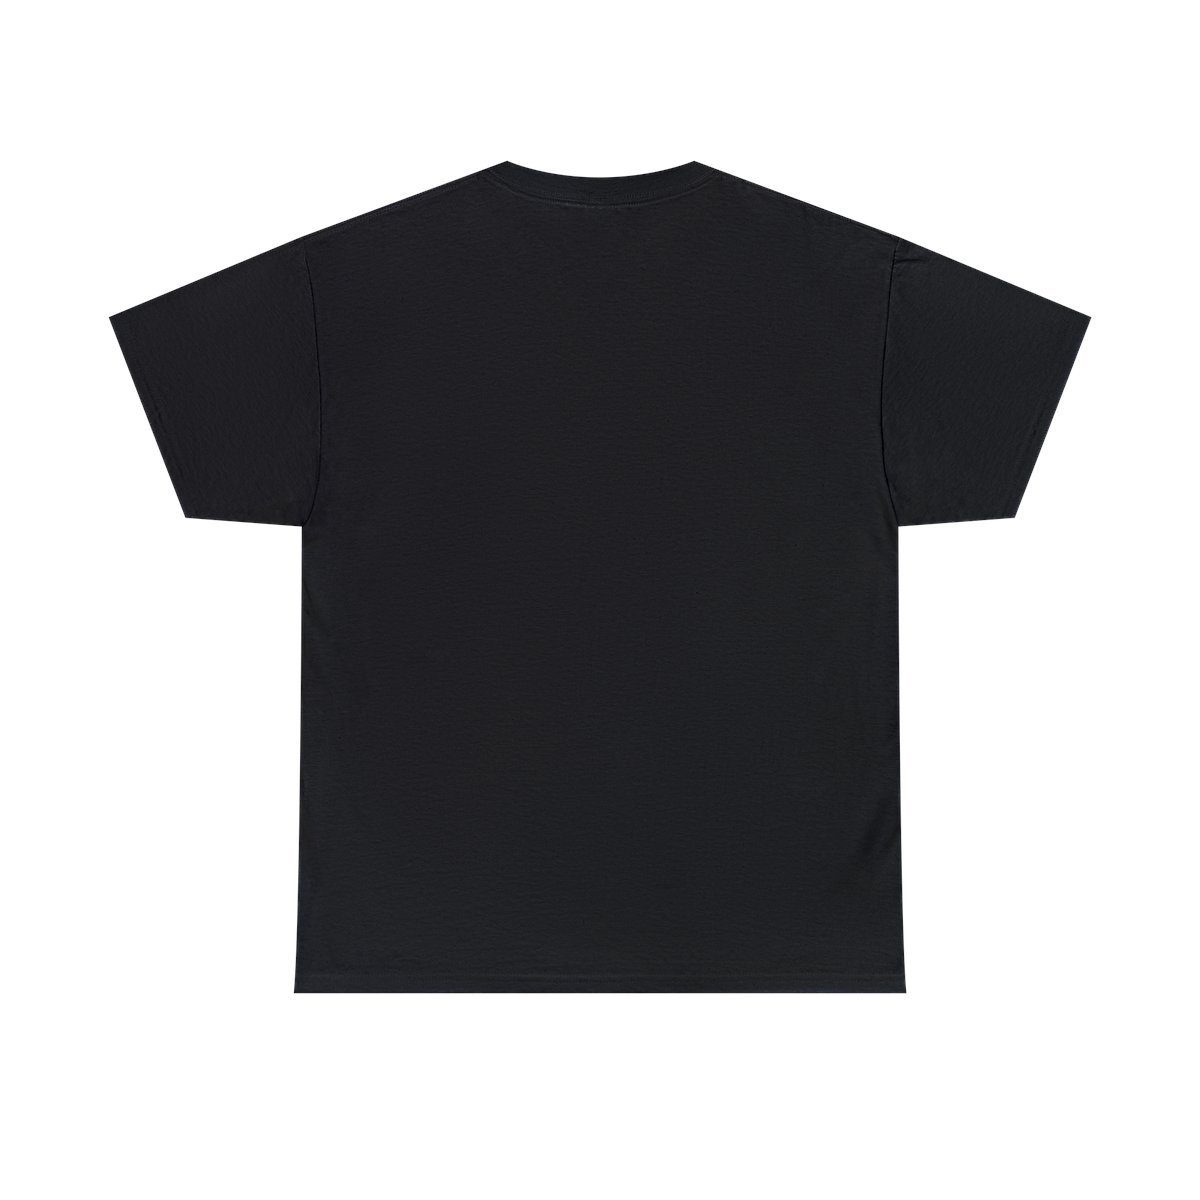 Big Rev – Make A Stand Short Sleeve T-shirt